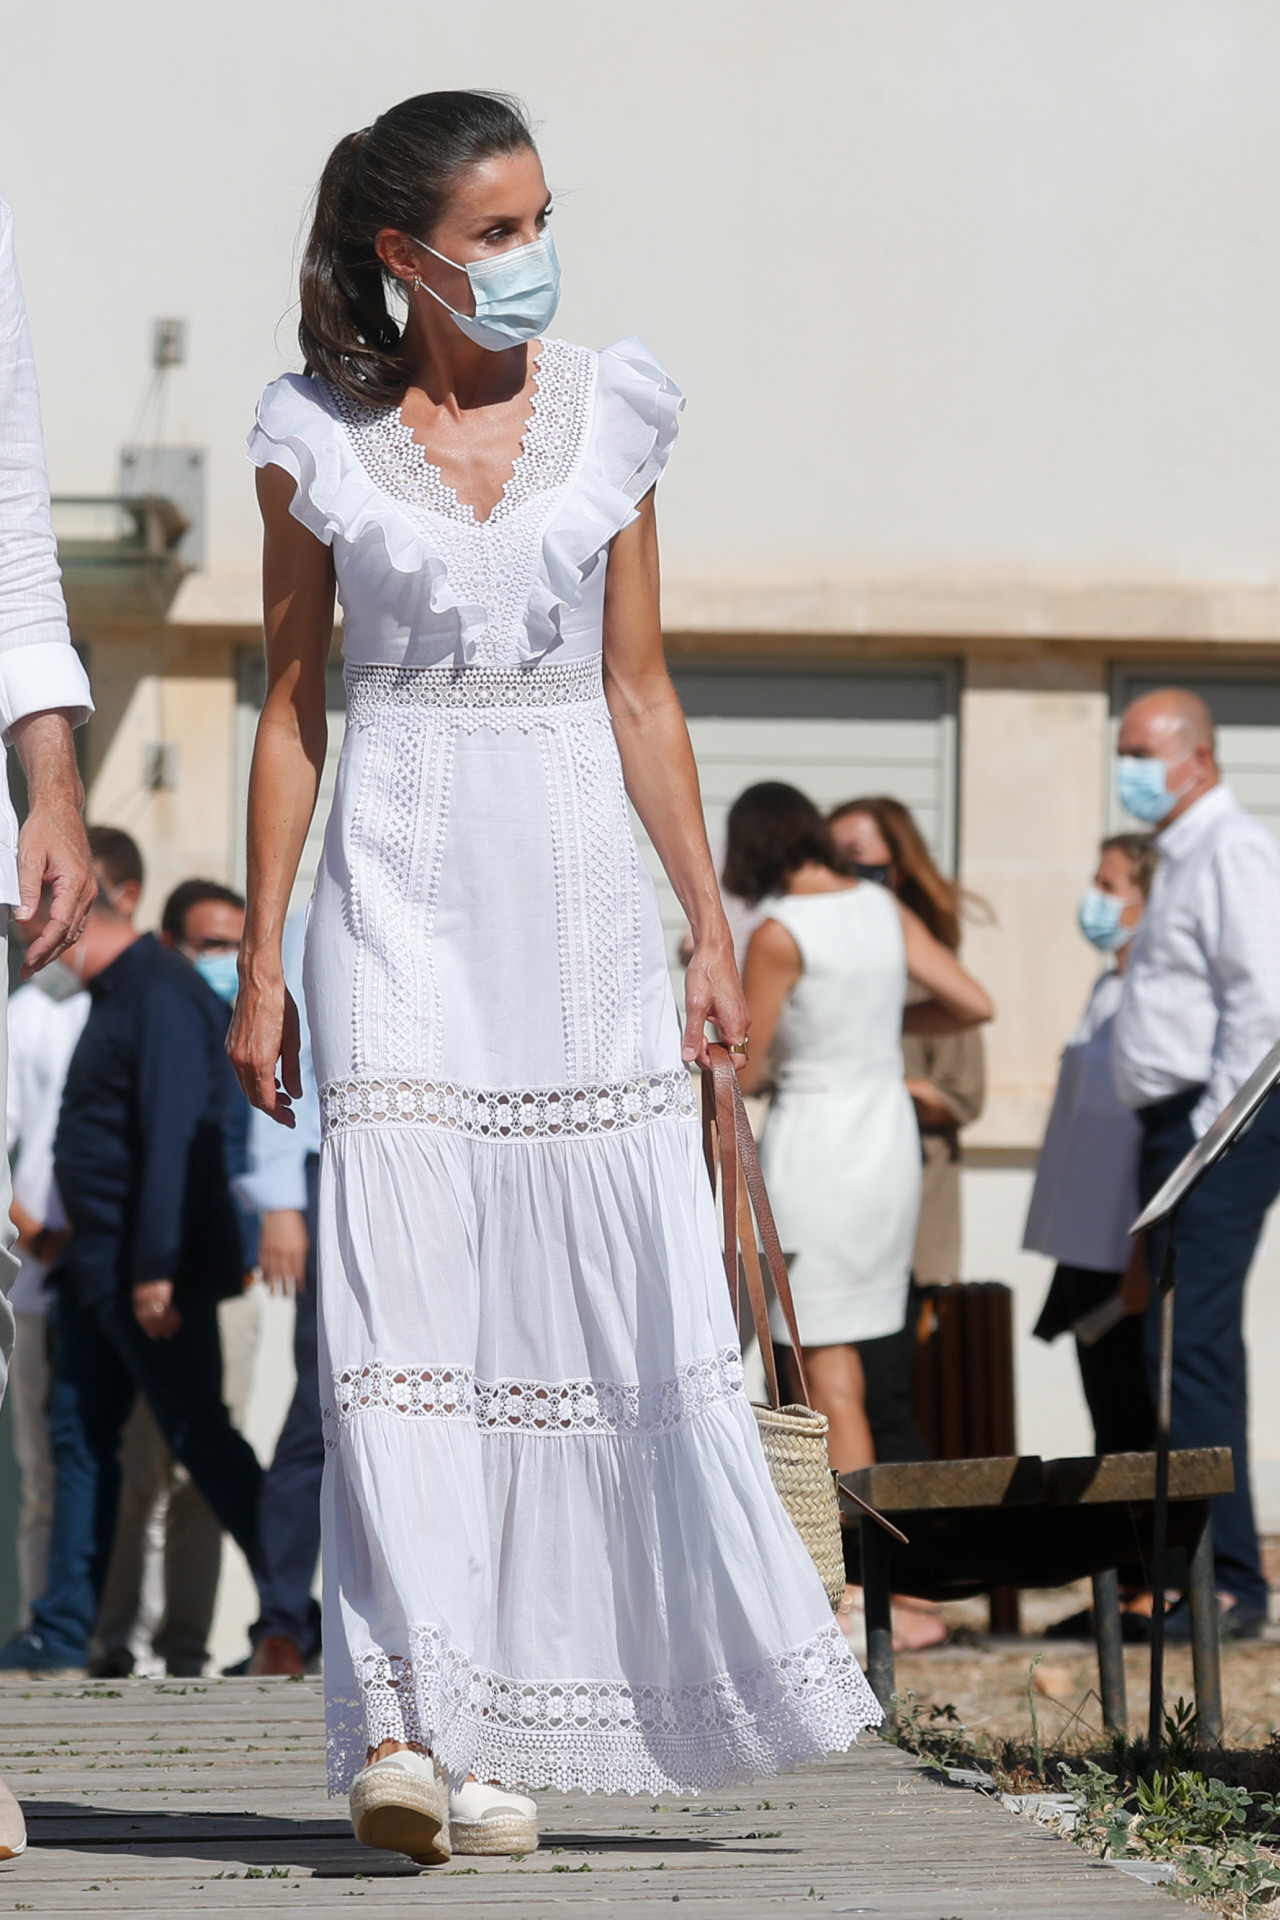 La reina Letizia con vestido blanco con volantes.